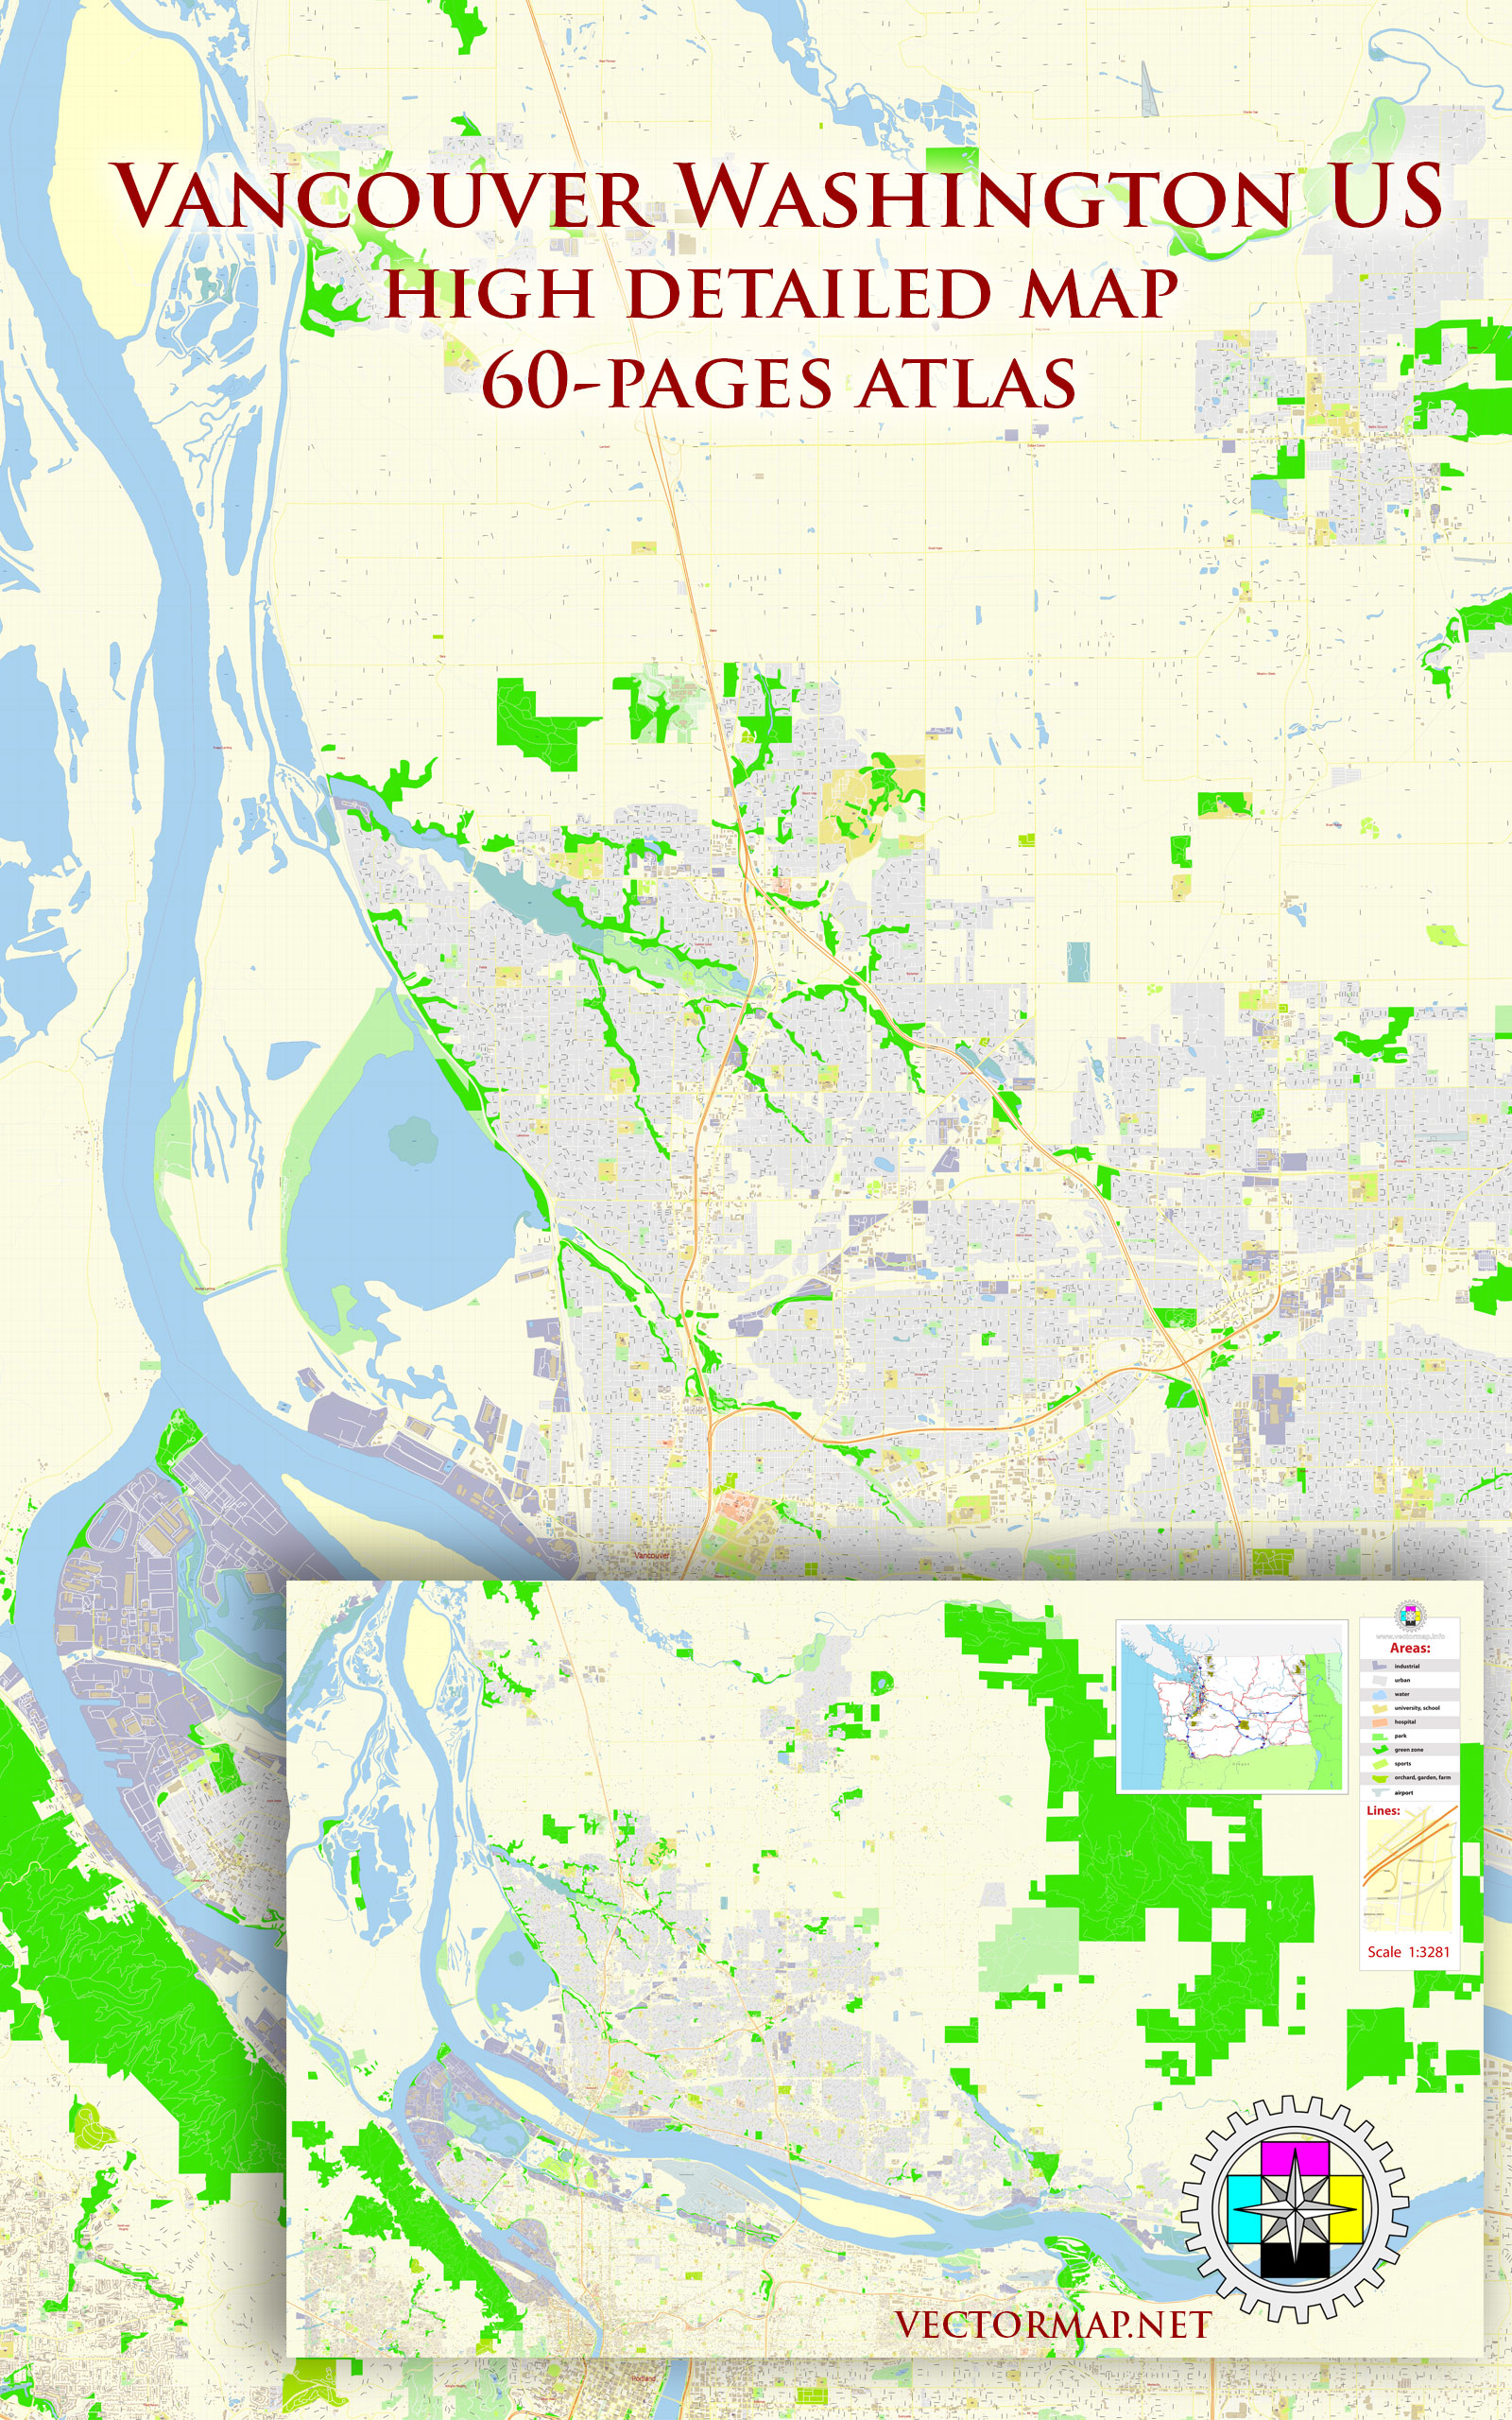 Vancouver Washington US Tourist Map multi-page atlas, contains 60 pages vector PDF